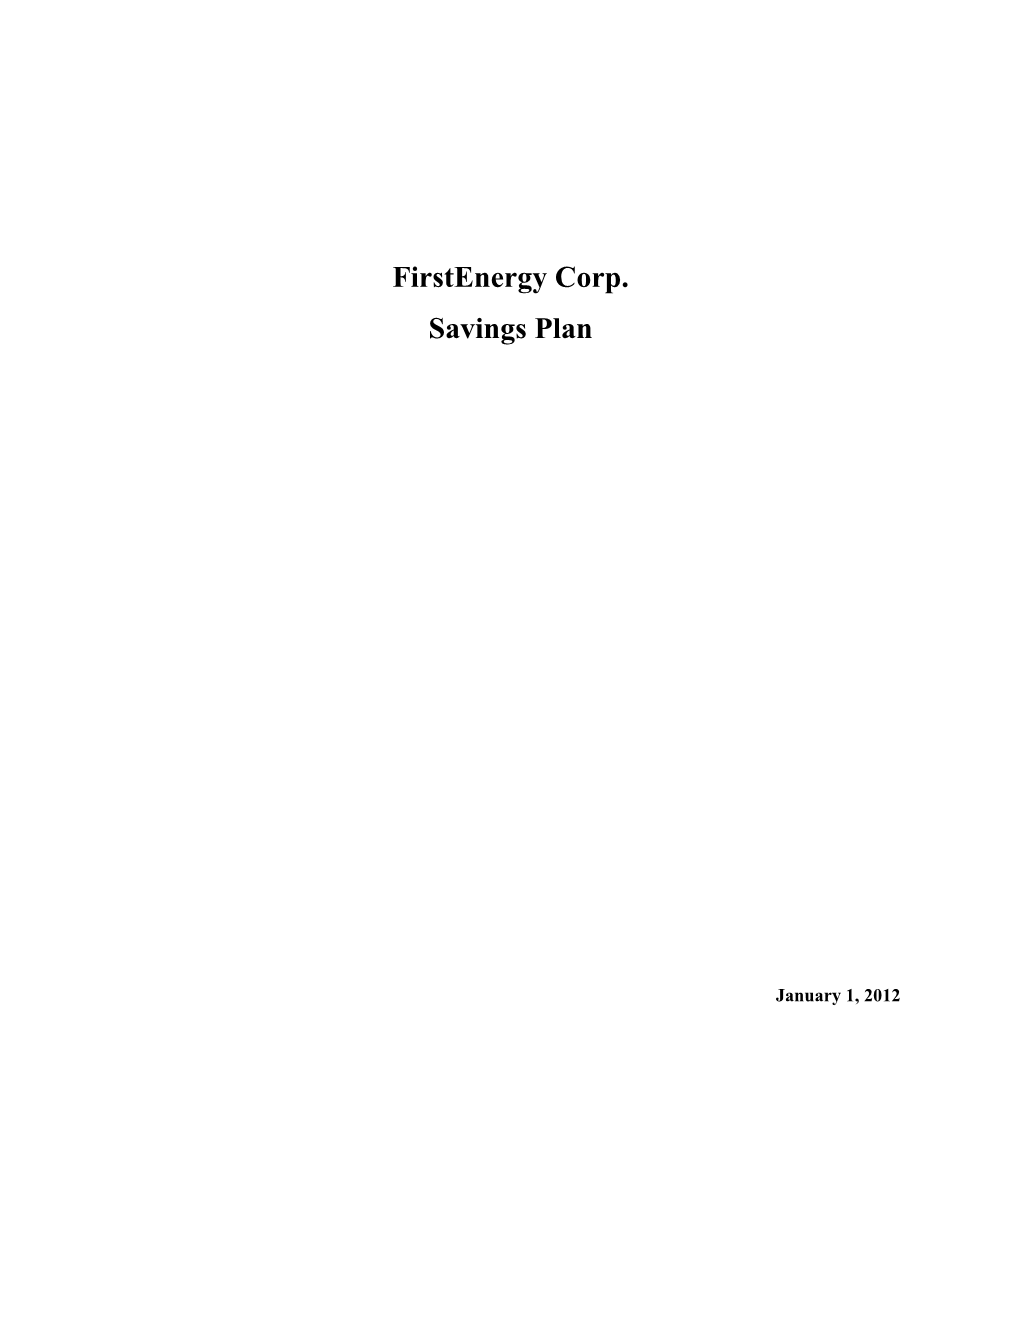 Firstenergy Corp. Savings Plan